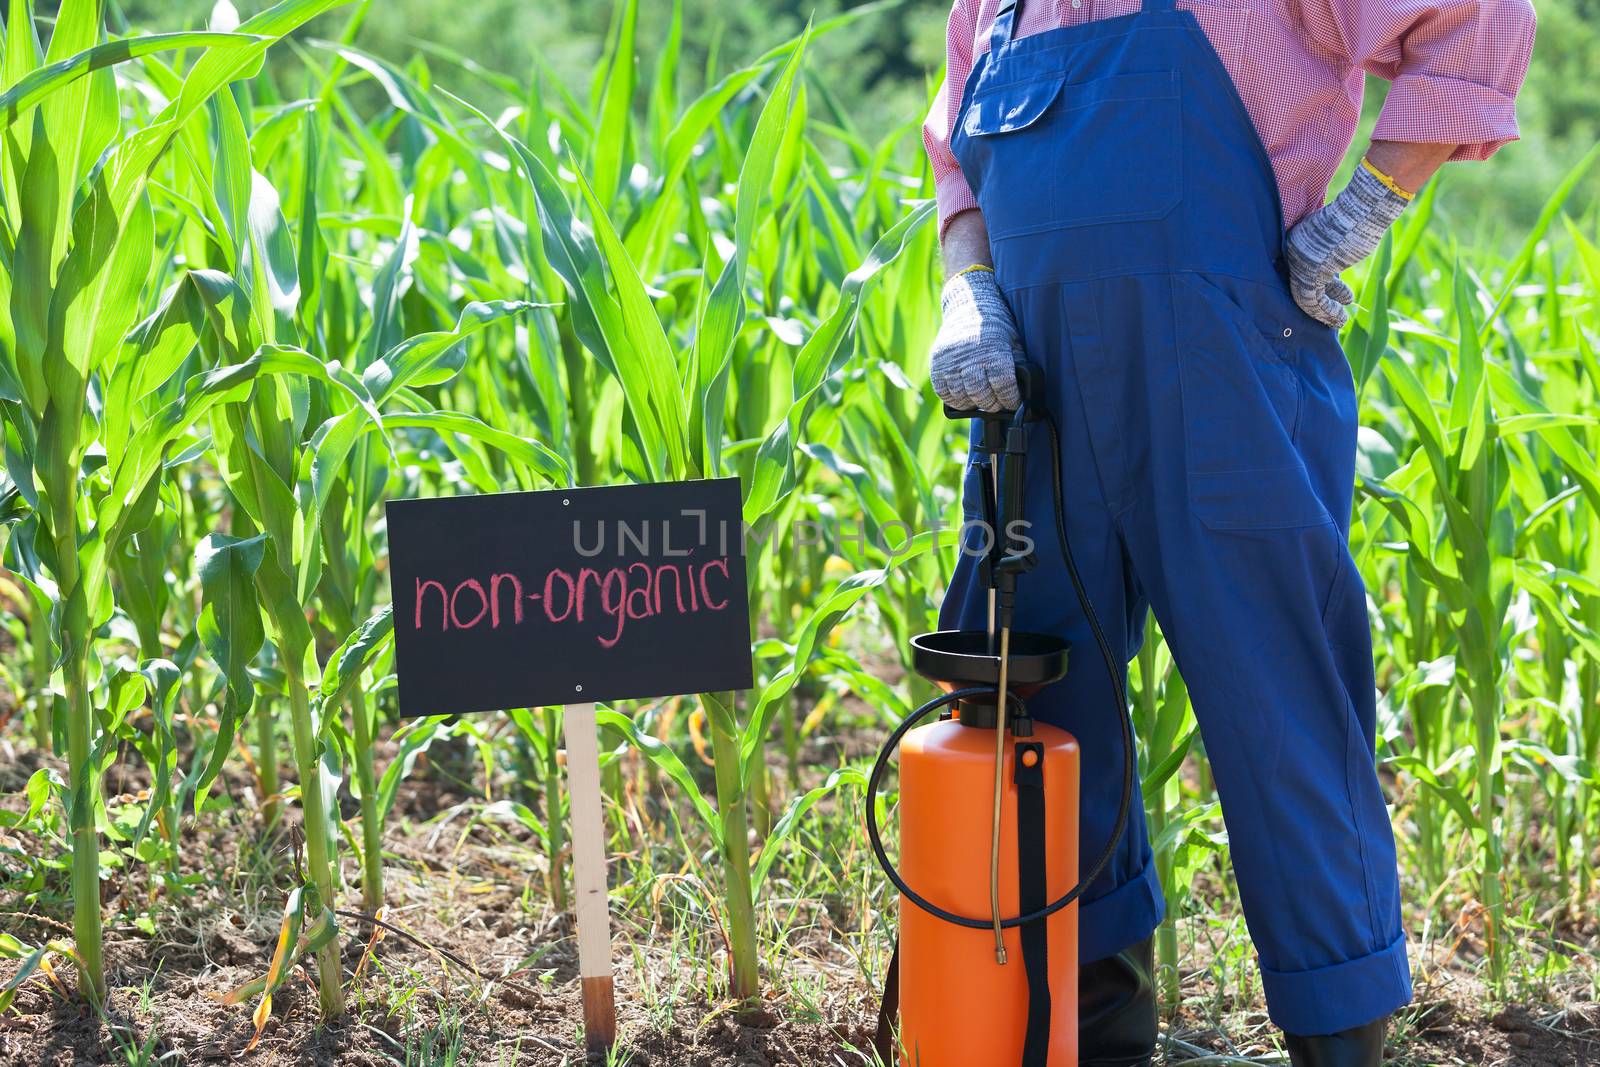 Non-organic corn field by wellphoto